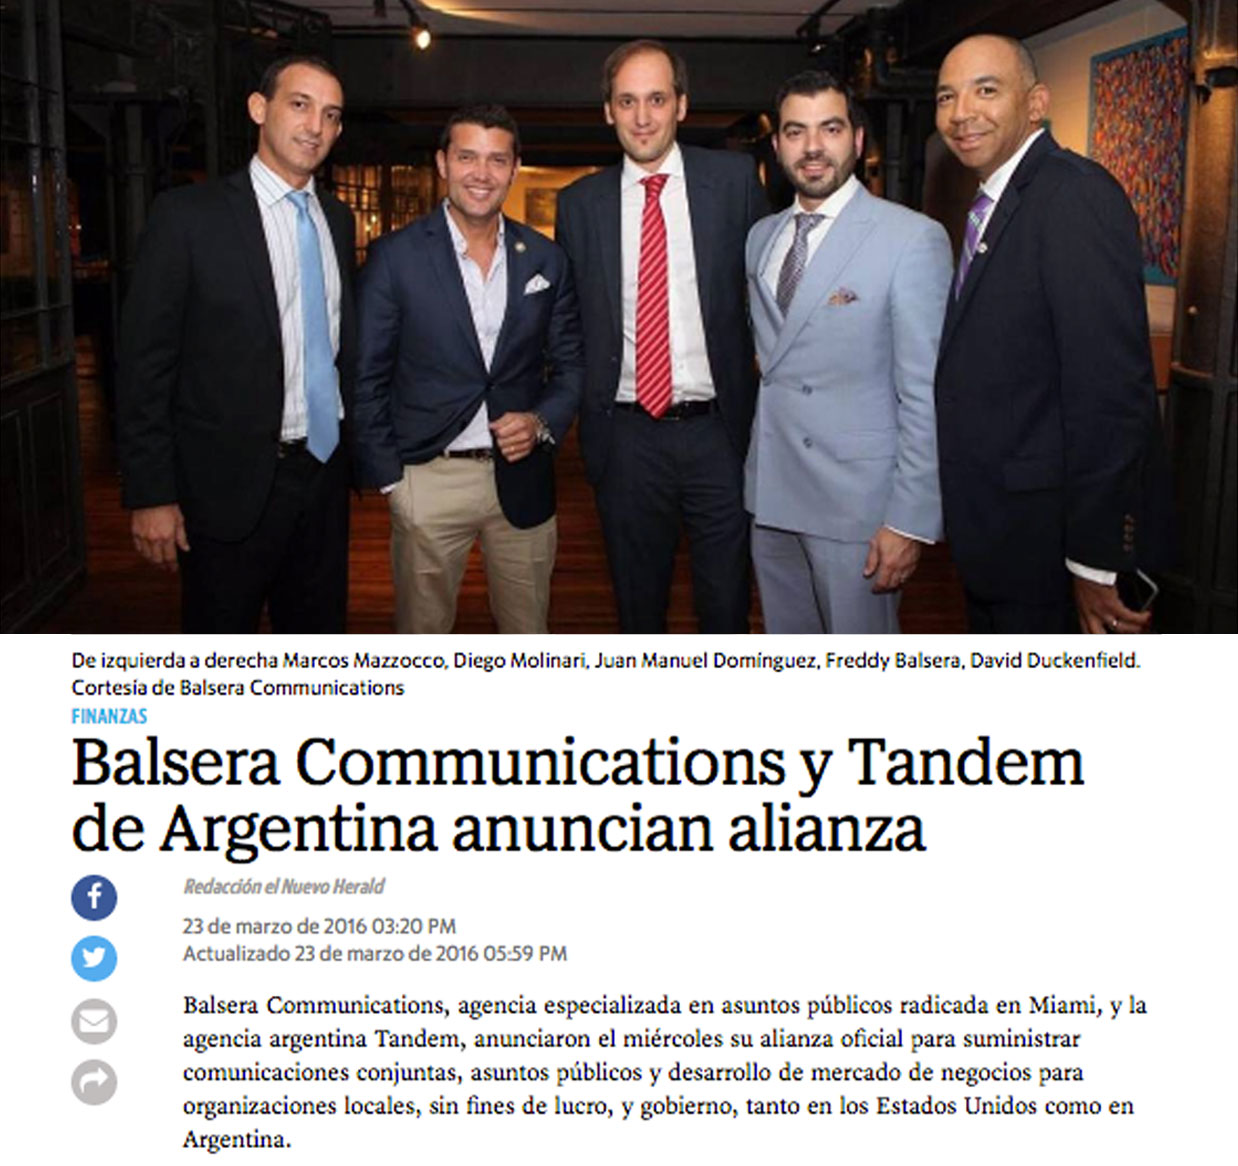 Balsera Communications in Tamden of Argentina announce partnership agreement.